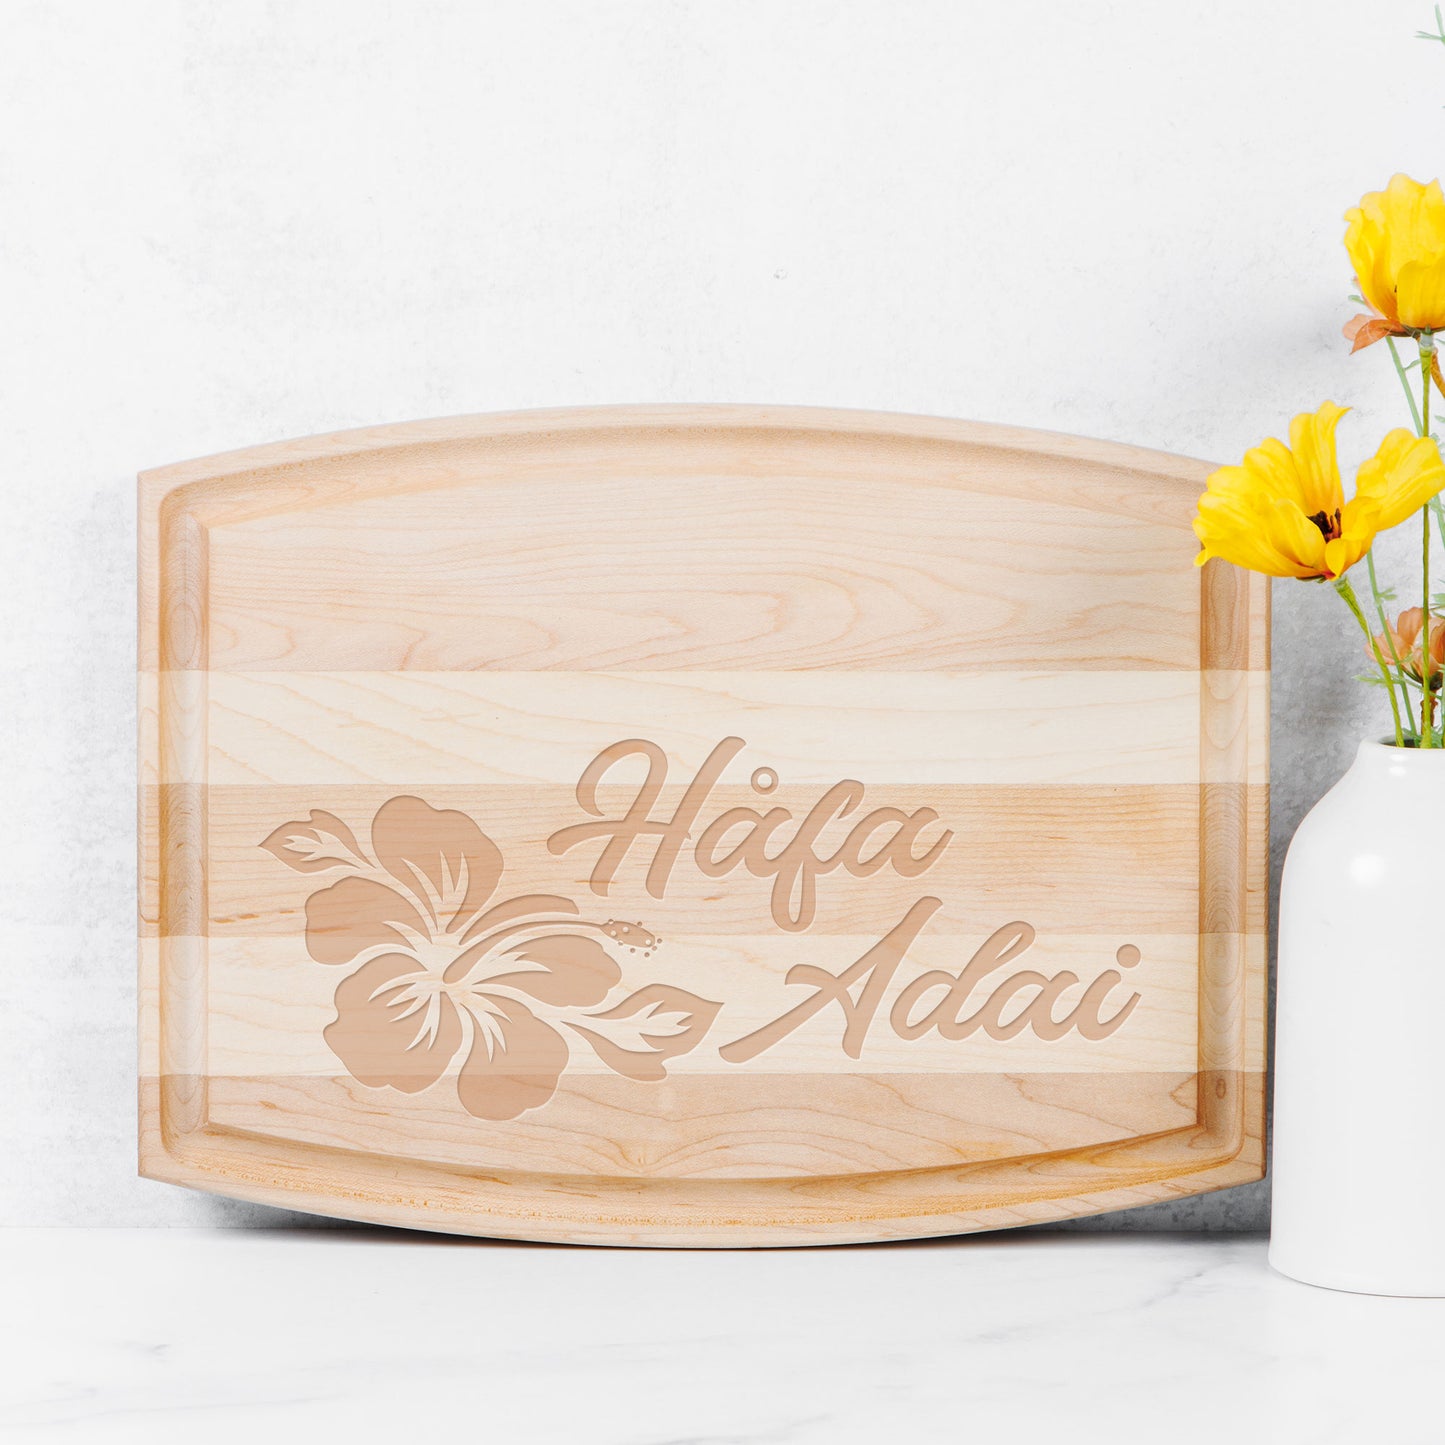 Hafa Adai Guam CNMI Hibiscus Arched Wood Cutting Board with Groove